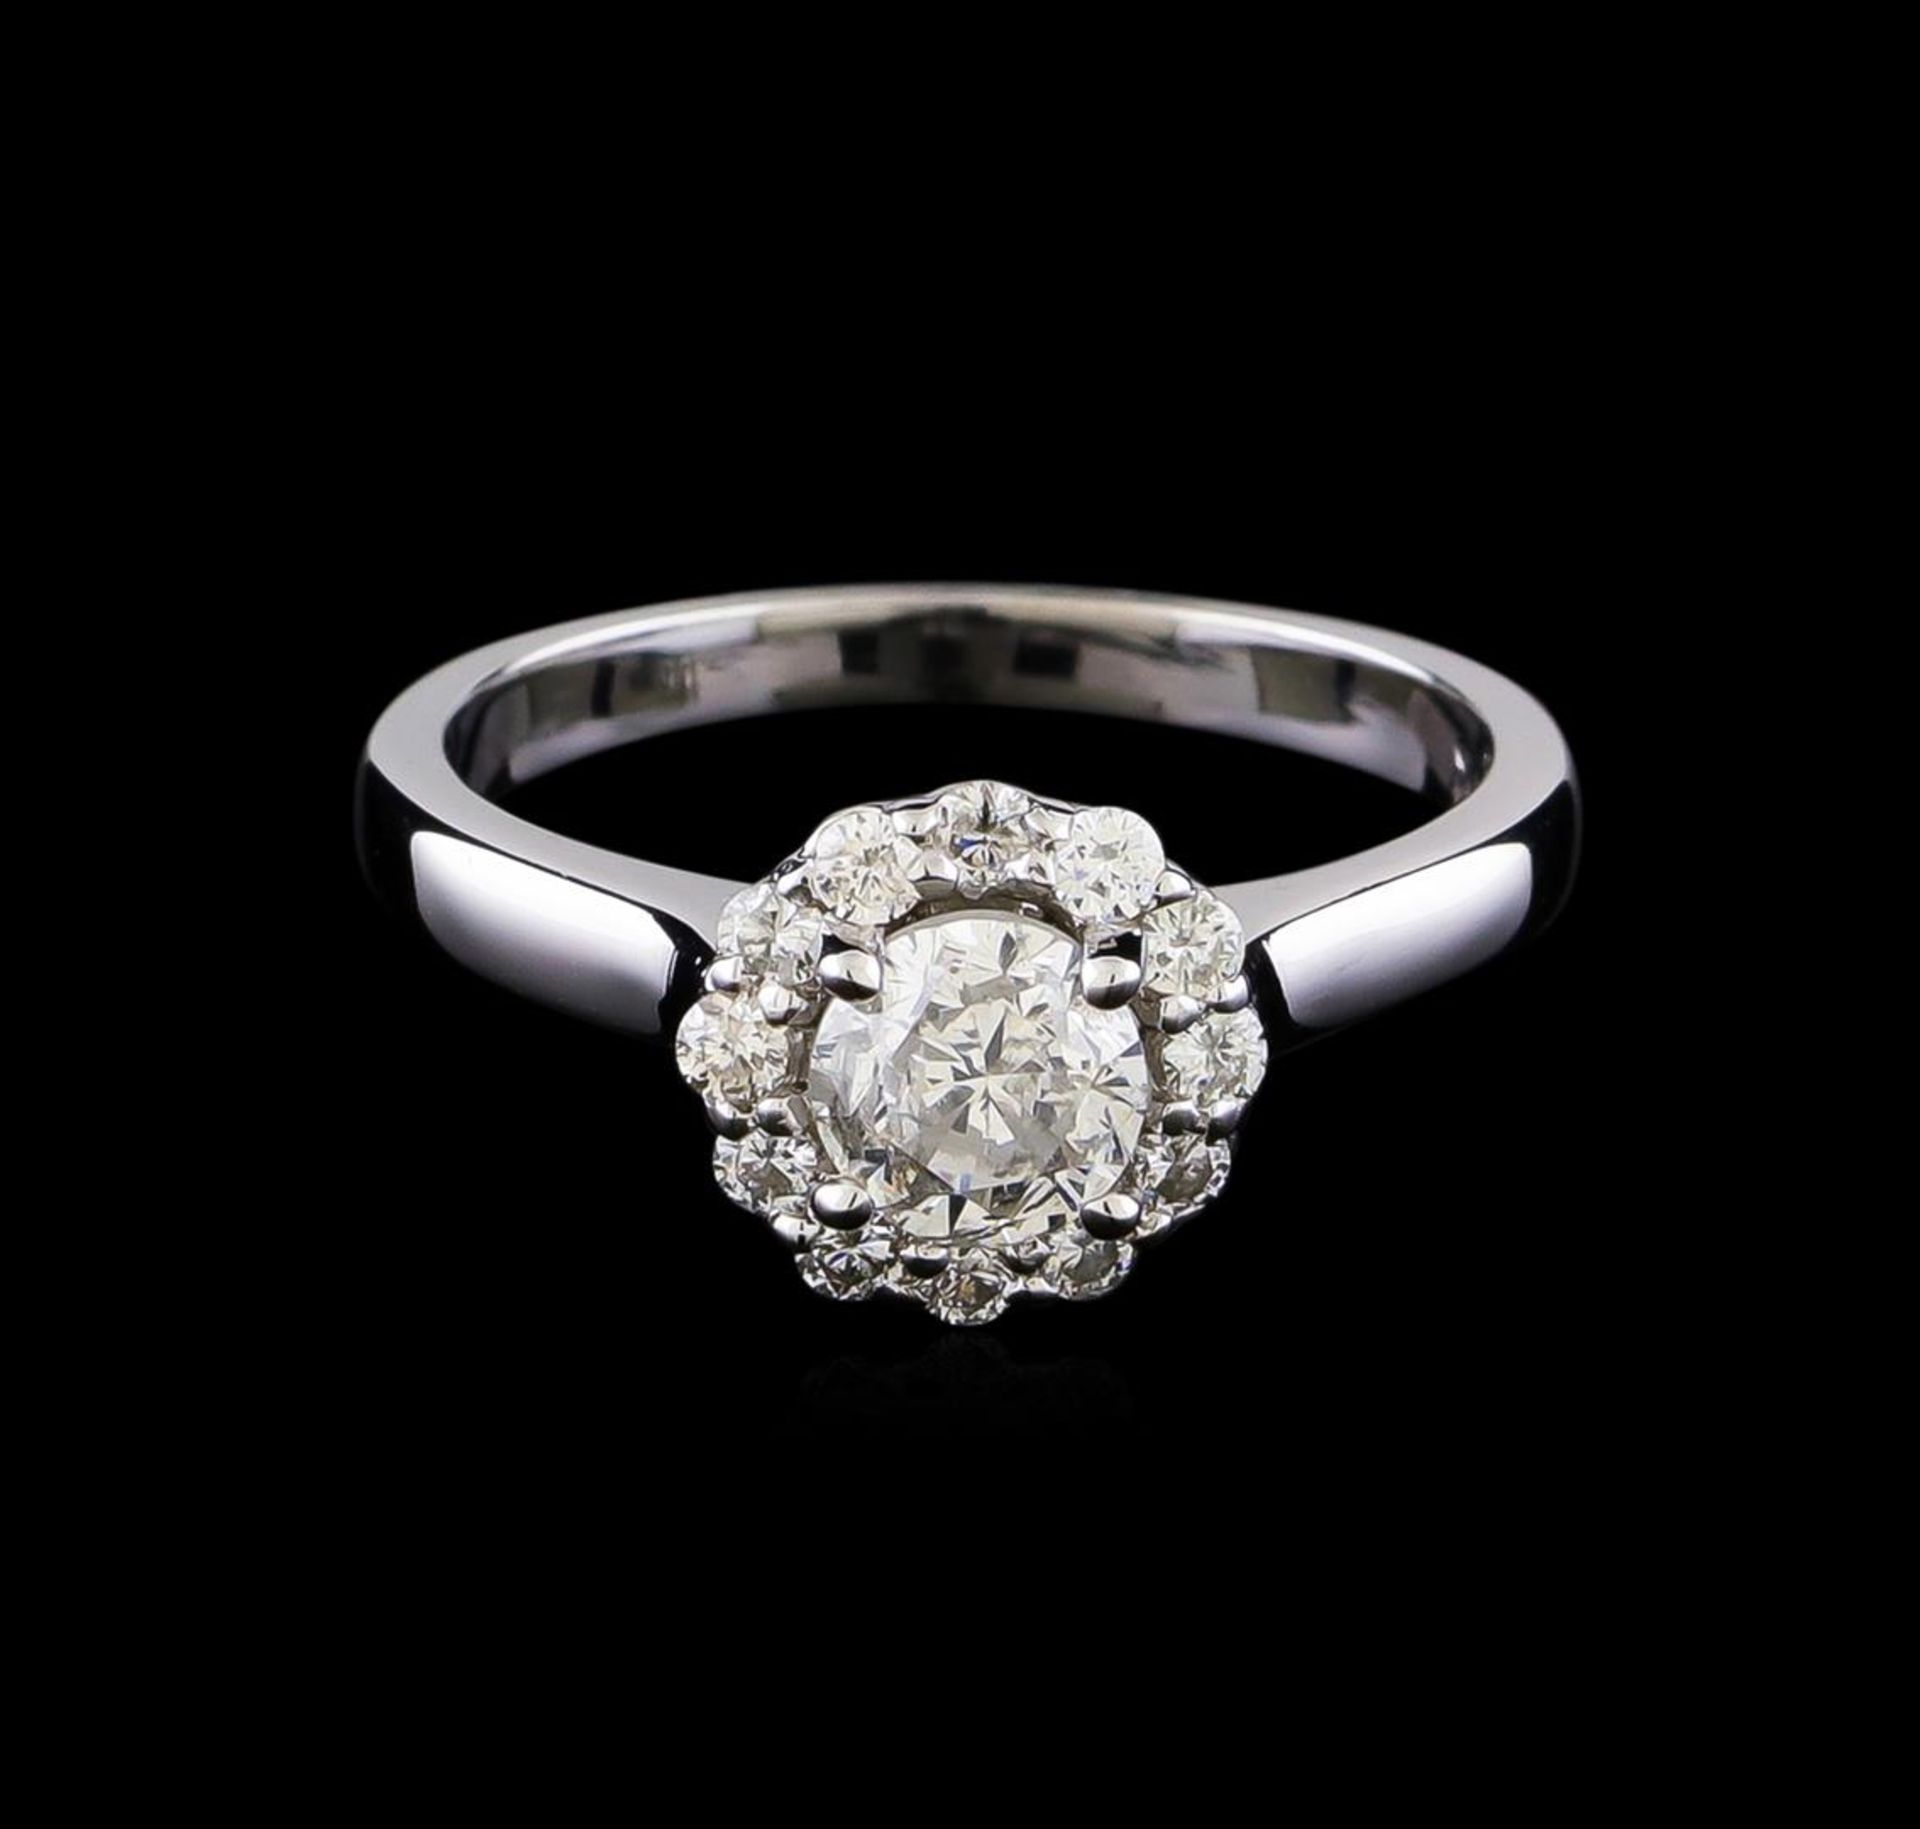 0.99 ctw Diamond Ring - 14KT White Gold - Image 2 of 5